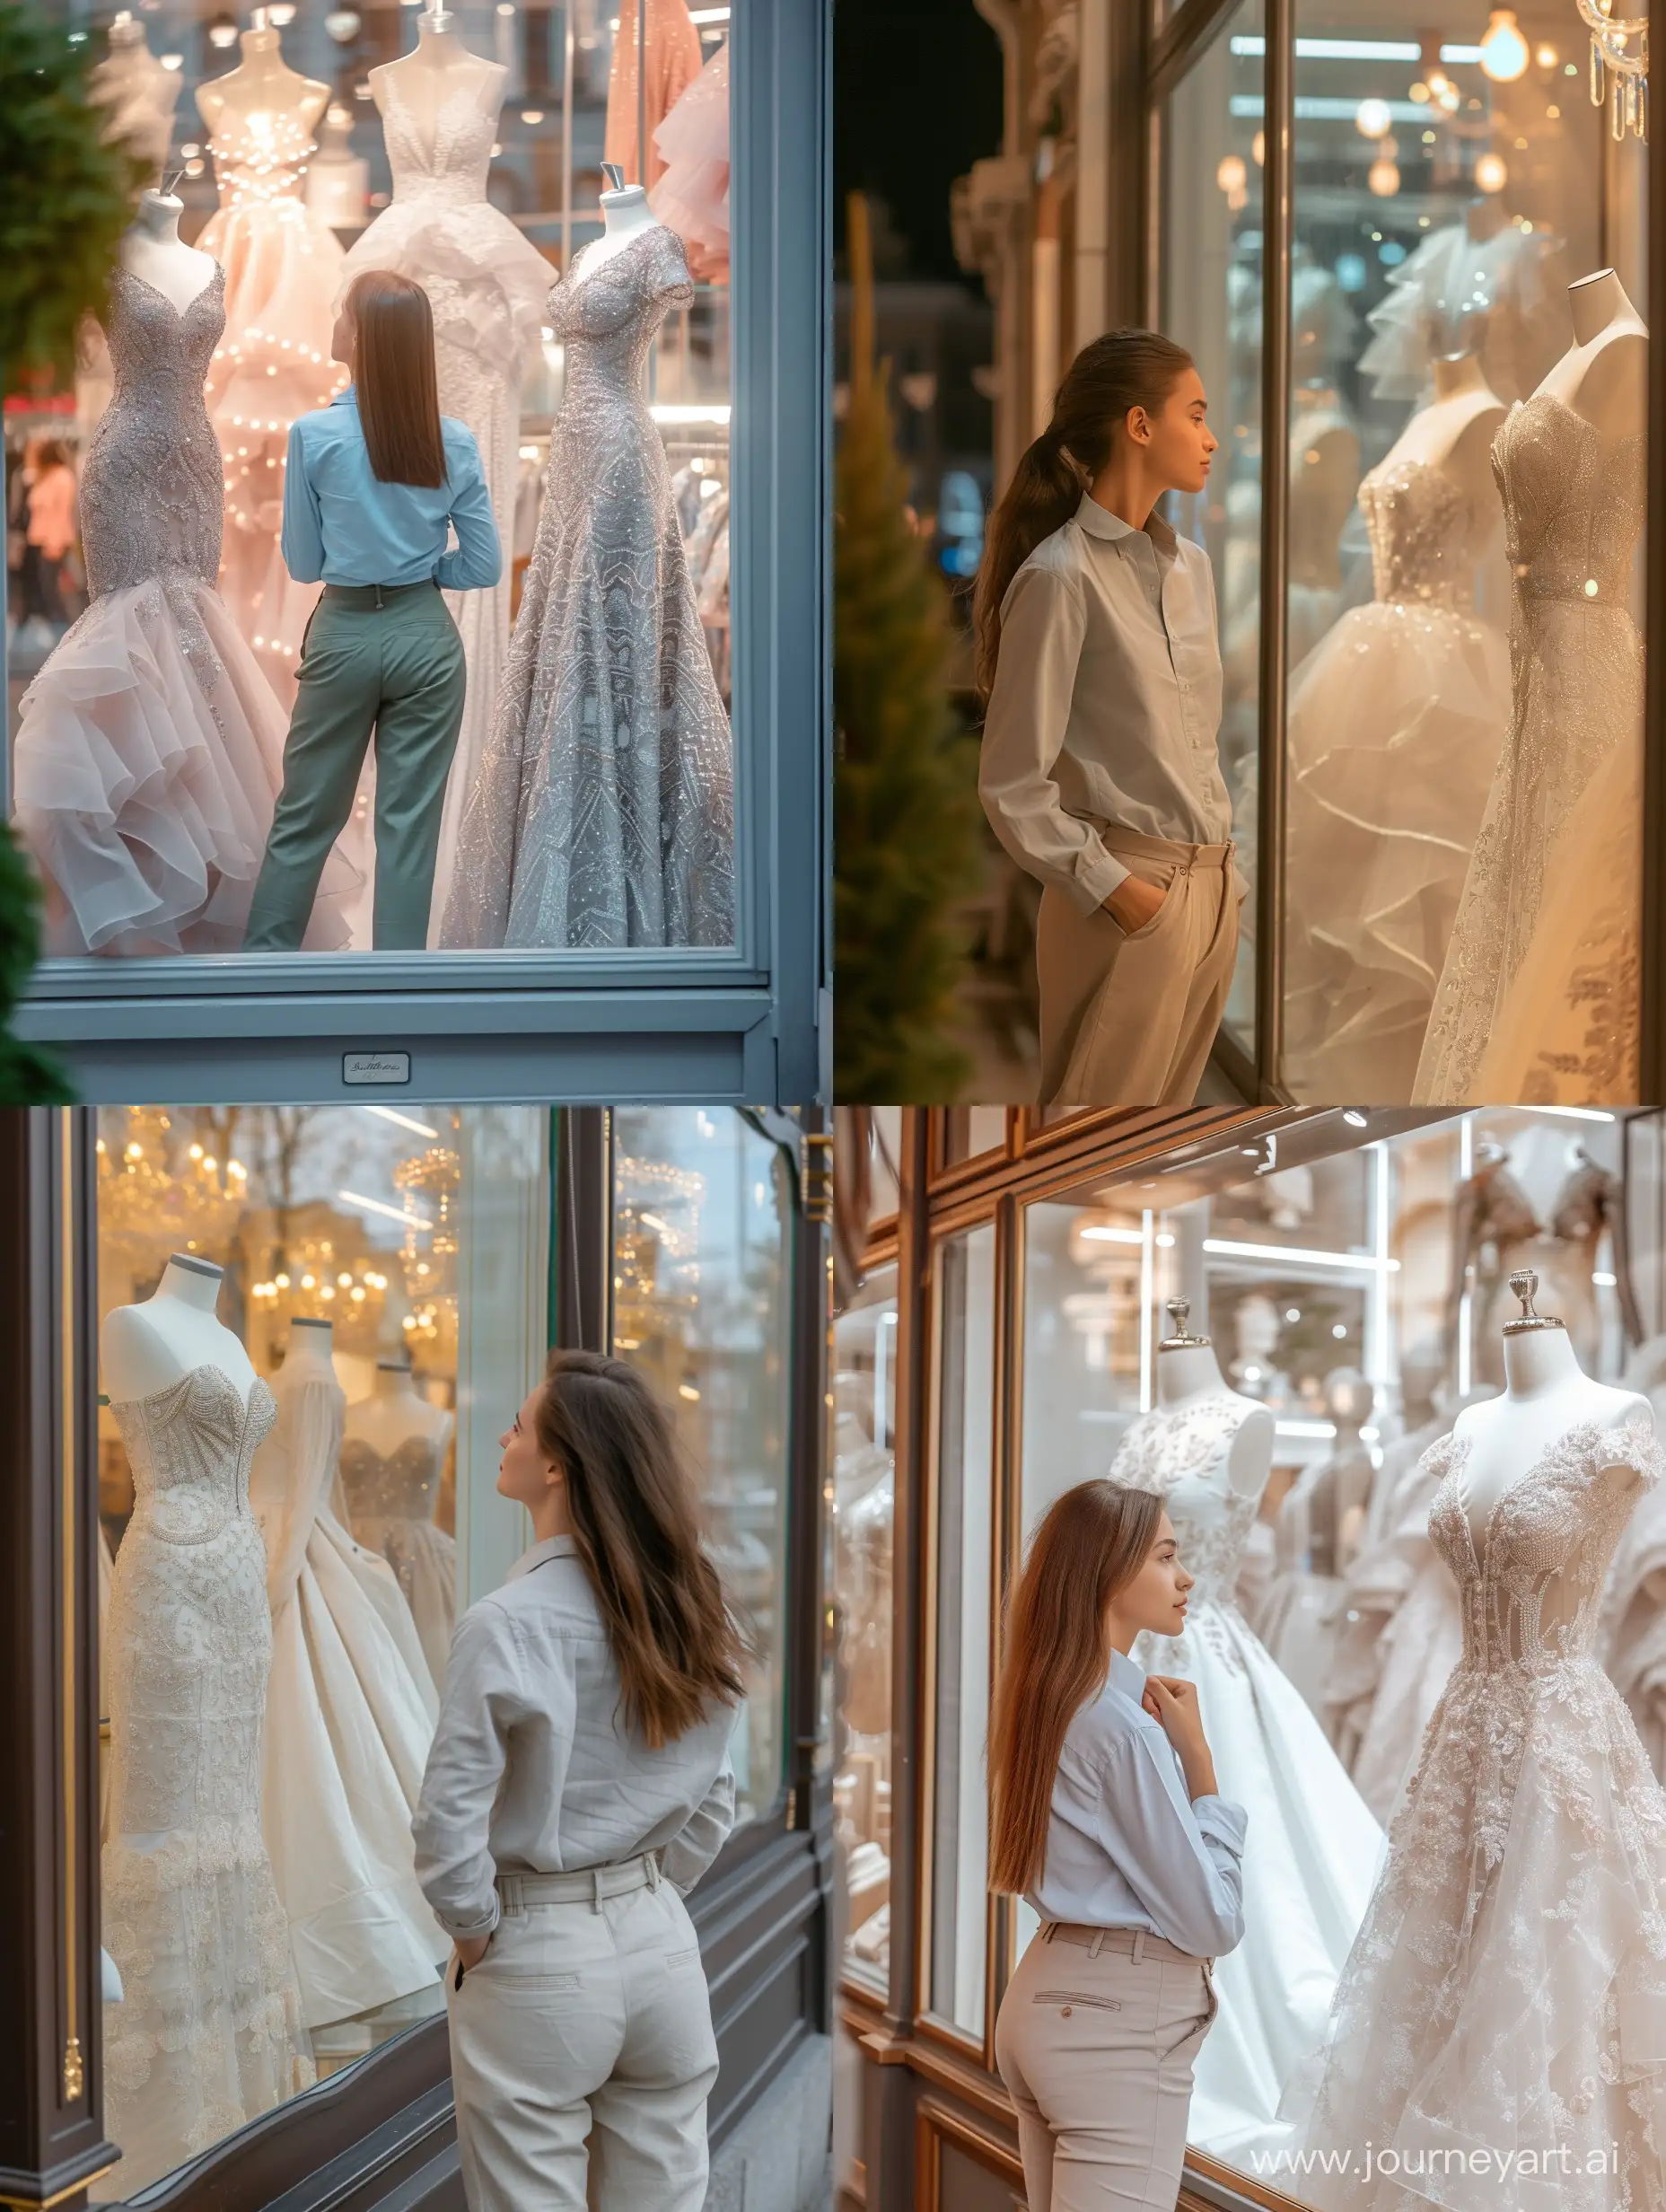 Fashion-Enthusiast-Admiring-Luxury-Dresses-in-Shop-Window